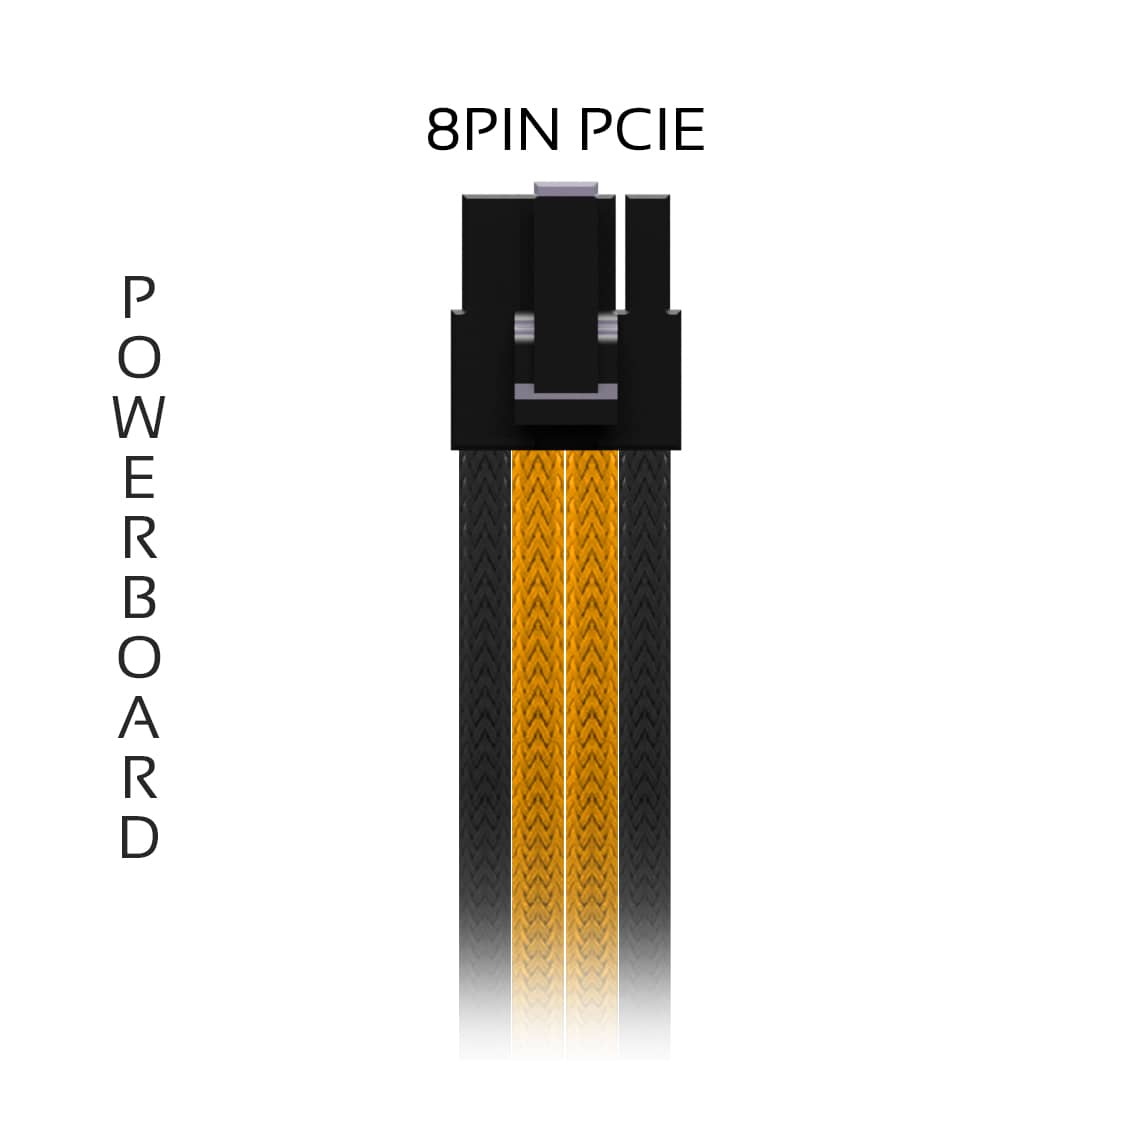 8pin-pcie-powerboard